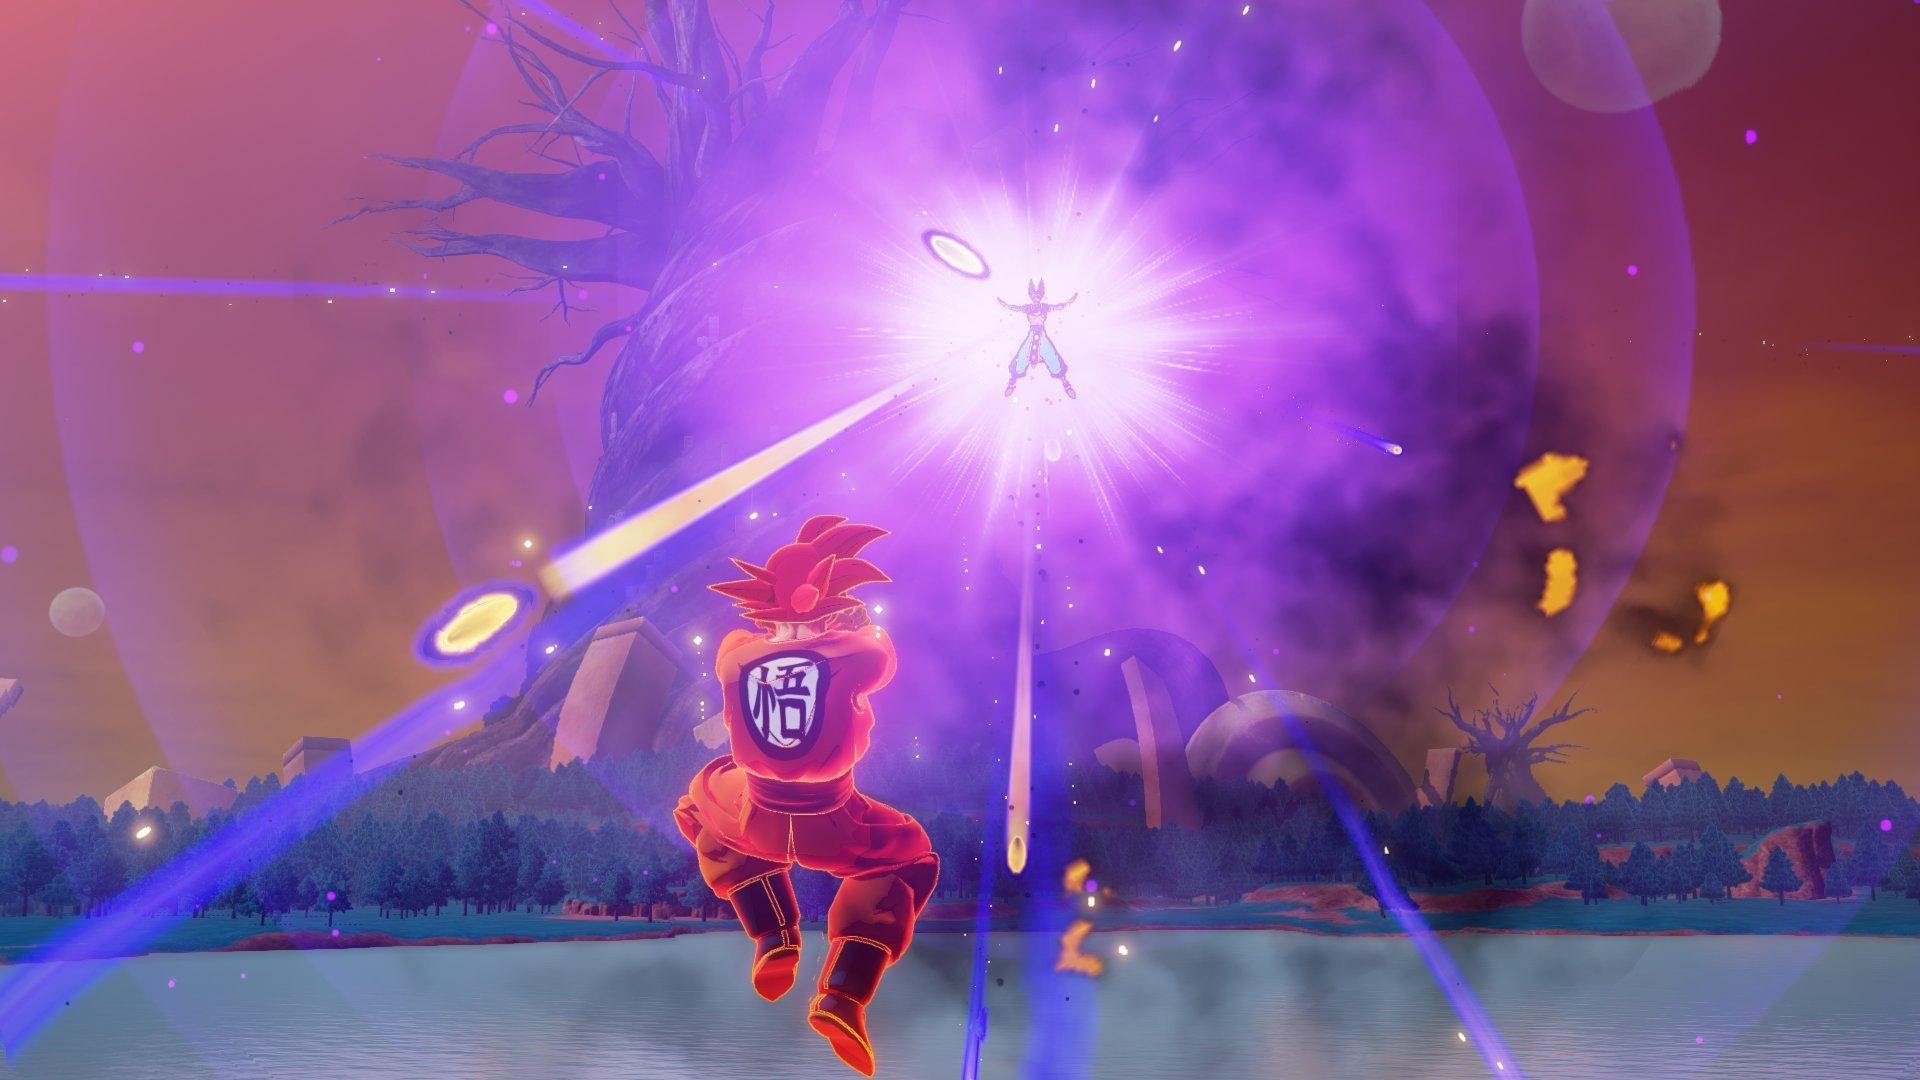 Dragon Ball Z: Kakarot - Android Saga Full Gameplay Walkthrough (Part 4)  [1080p HD] 